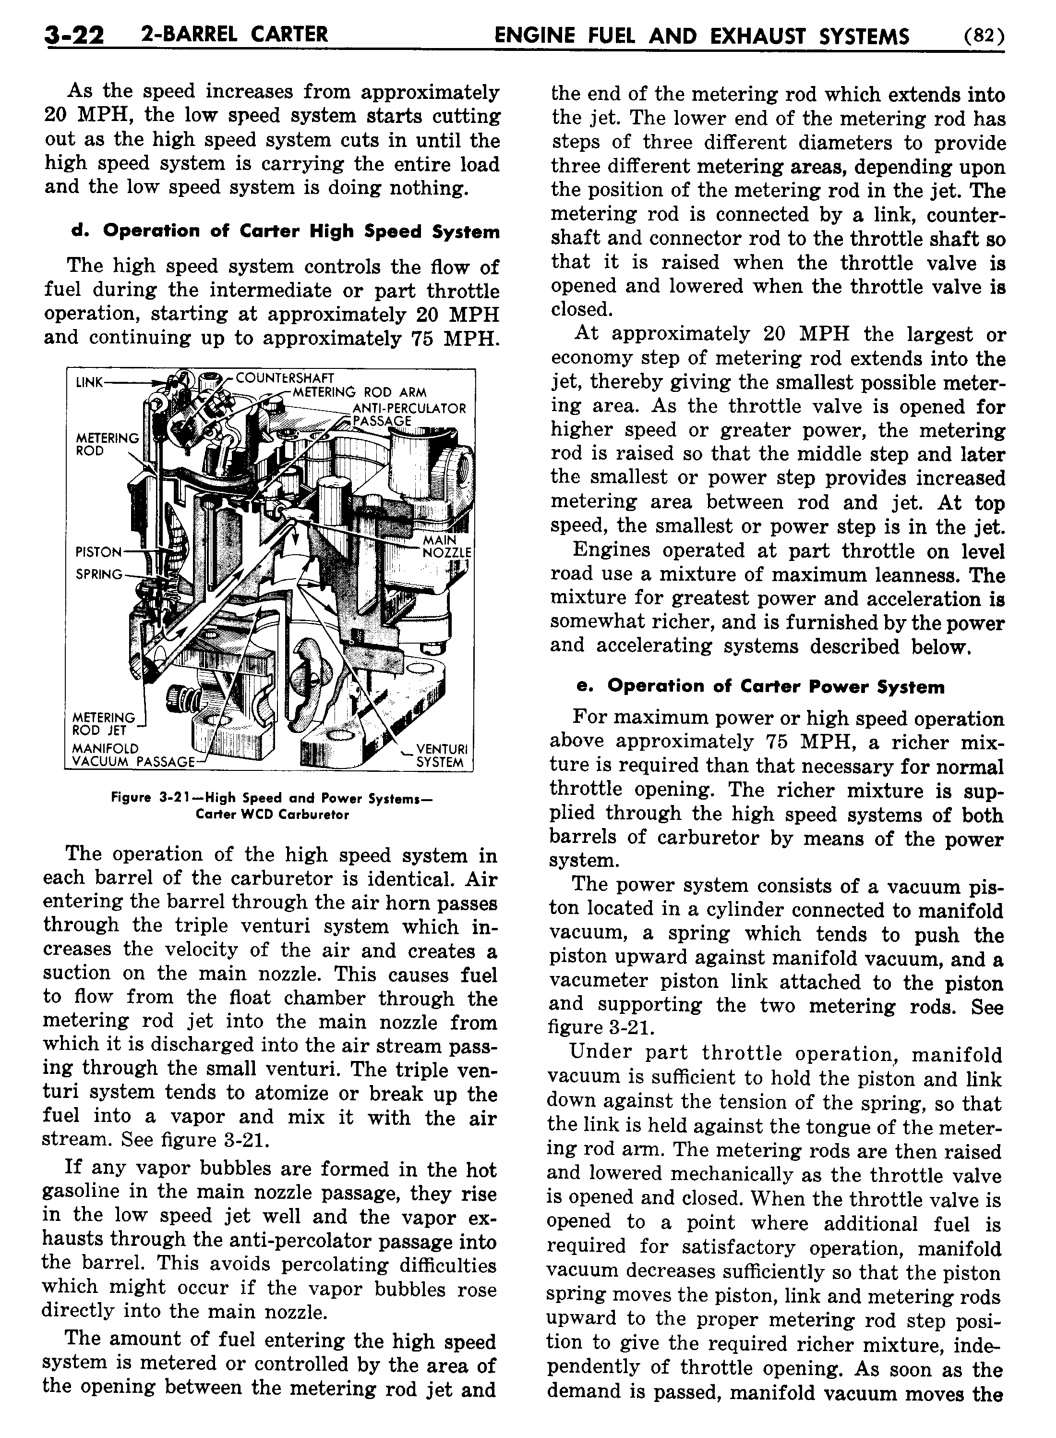 n_04 1955 Buick Shop Manual - Engine Fuel & Exhaust-022-022.jpg